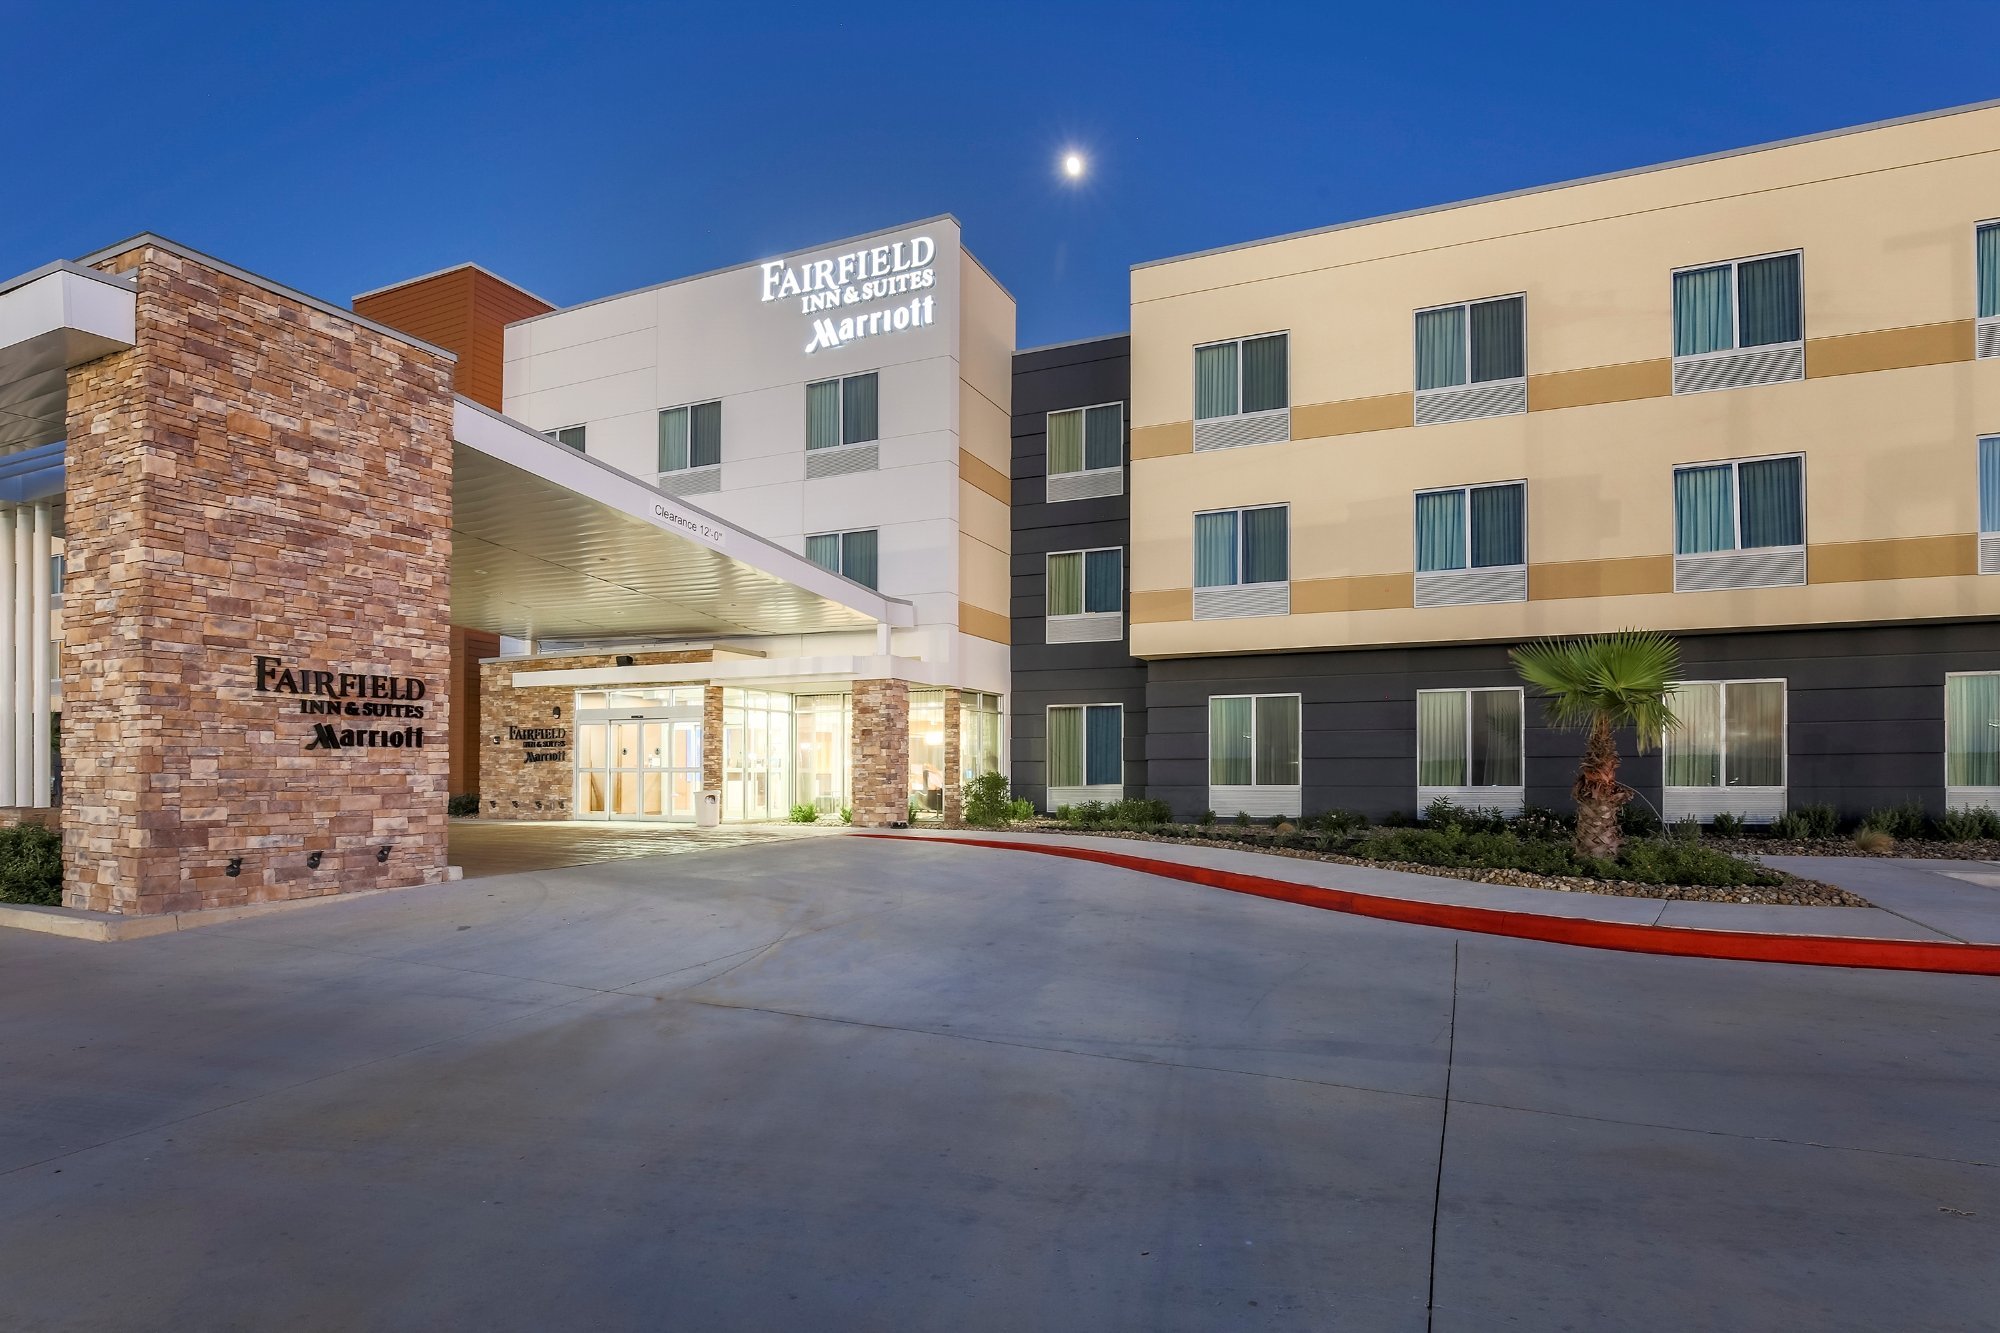 Photo of Fairfield Inn & Suites Pleasanton, Pleasanton, TX